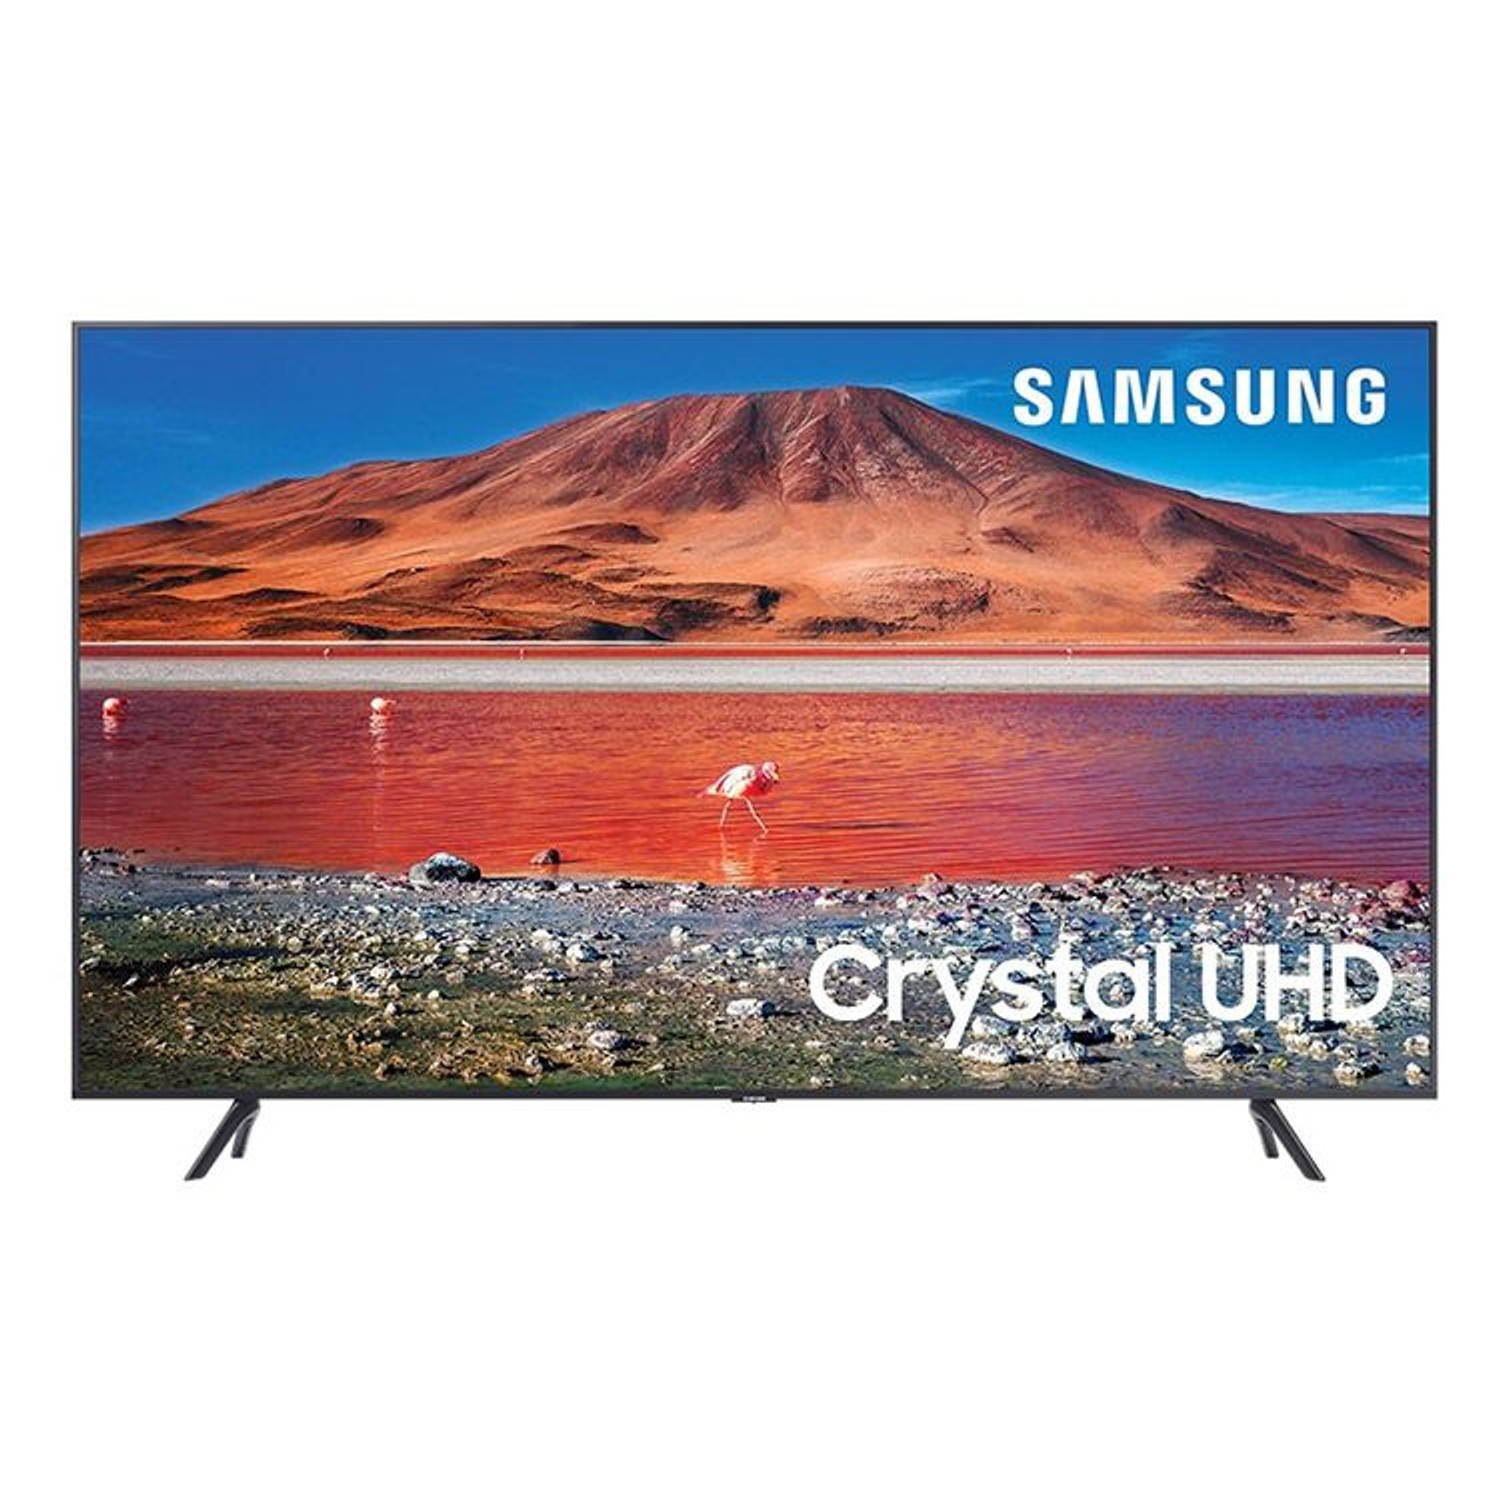 Samsung UE55TU7100 - 4K HDR LED Smart TV (55 inch)